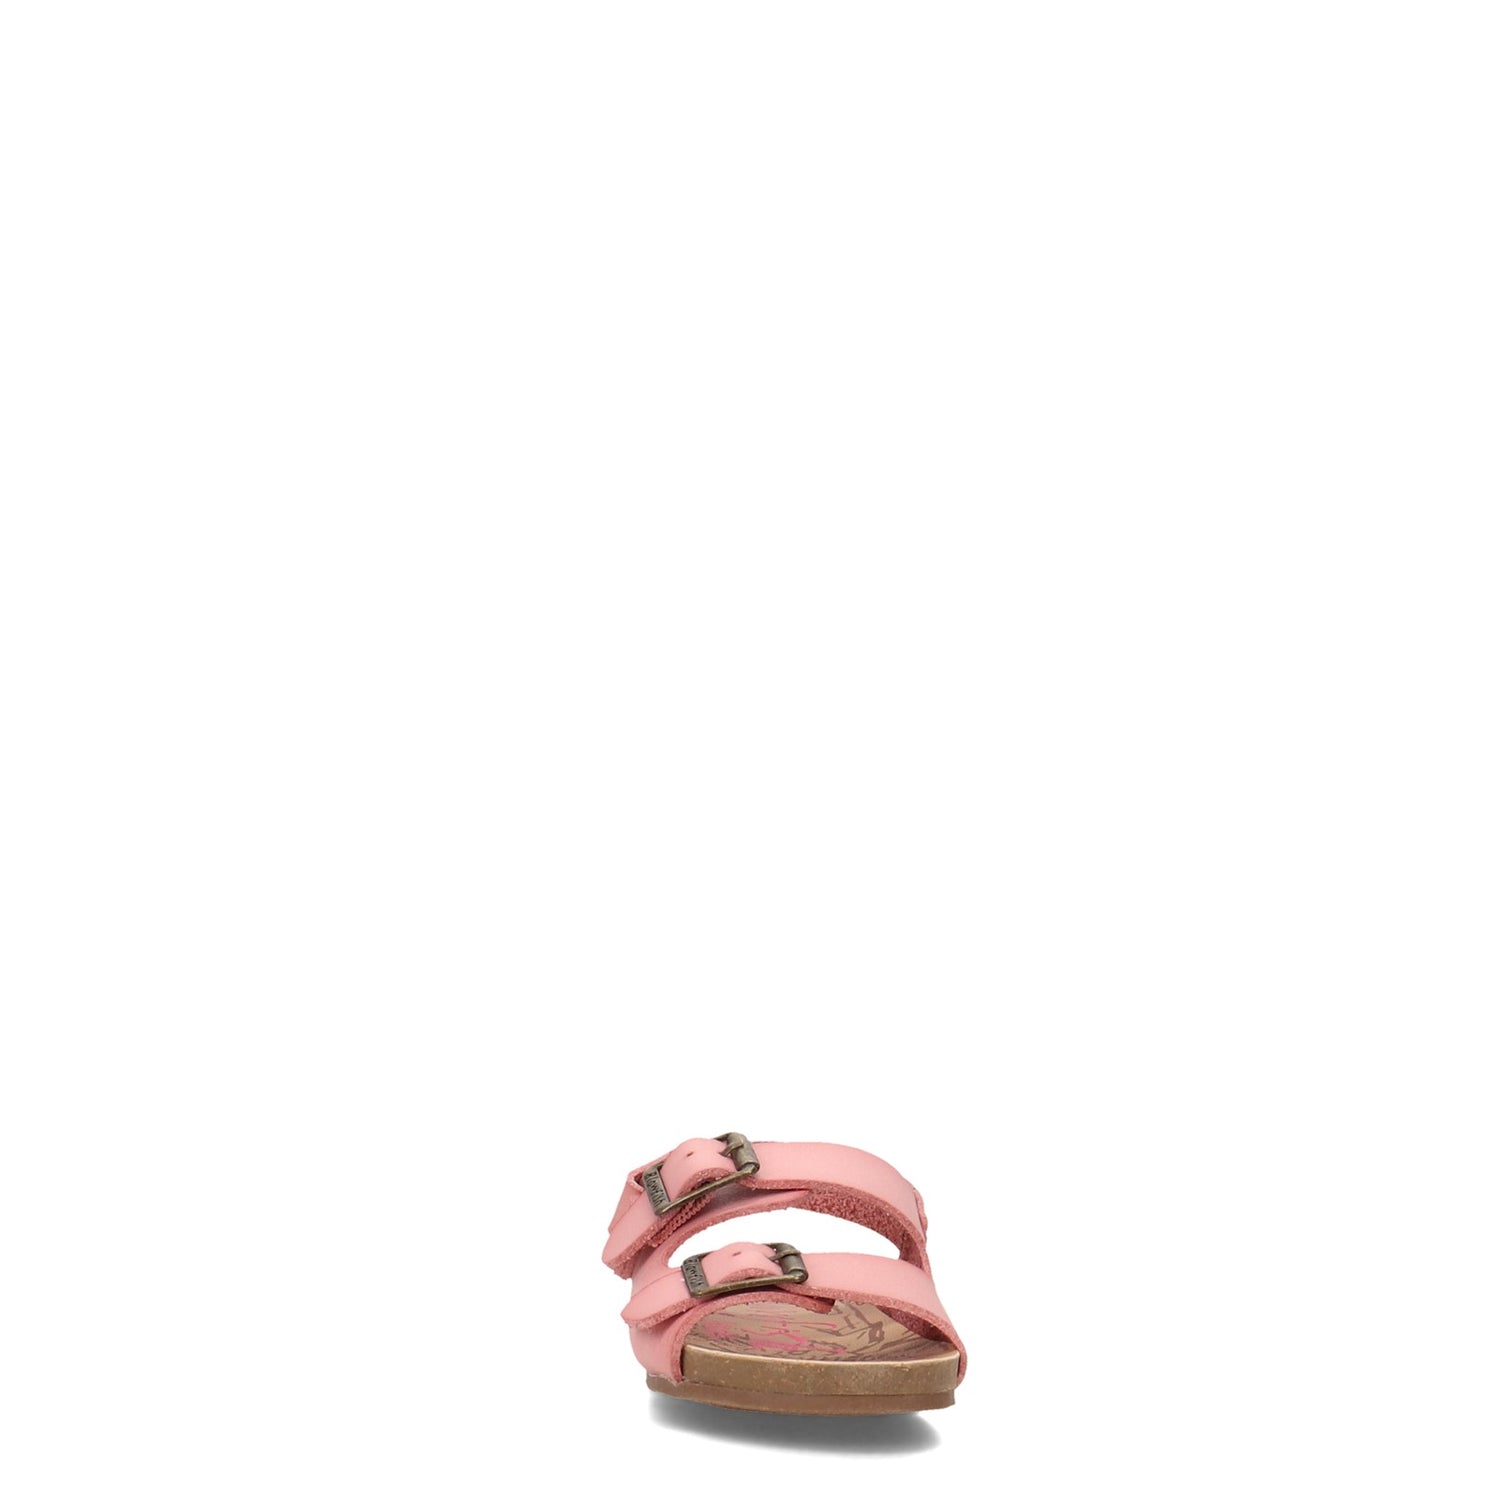 Peltz Shoes  Girl's Blowfish Malibu Goober Sandal - Toddler & Little Kid PINK BF-9402T 092